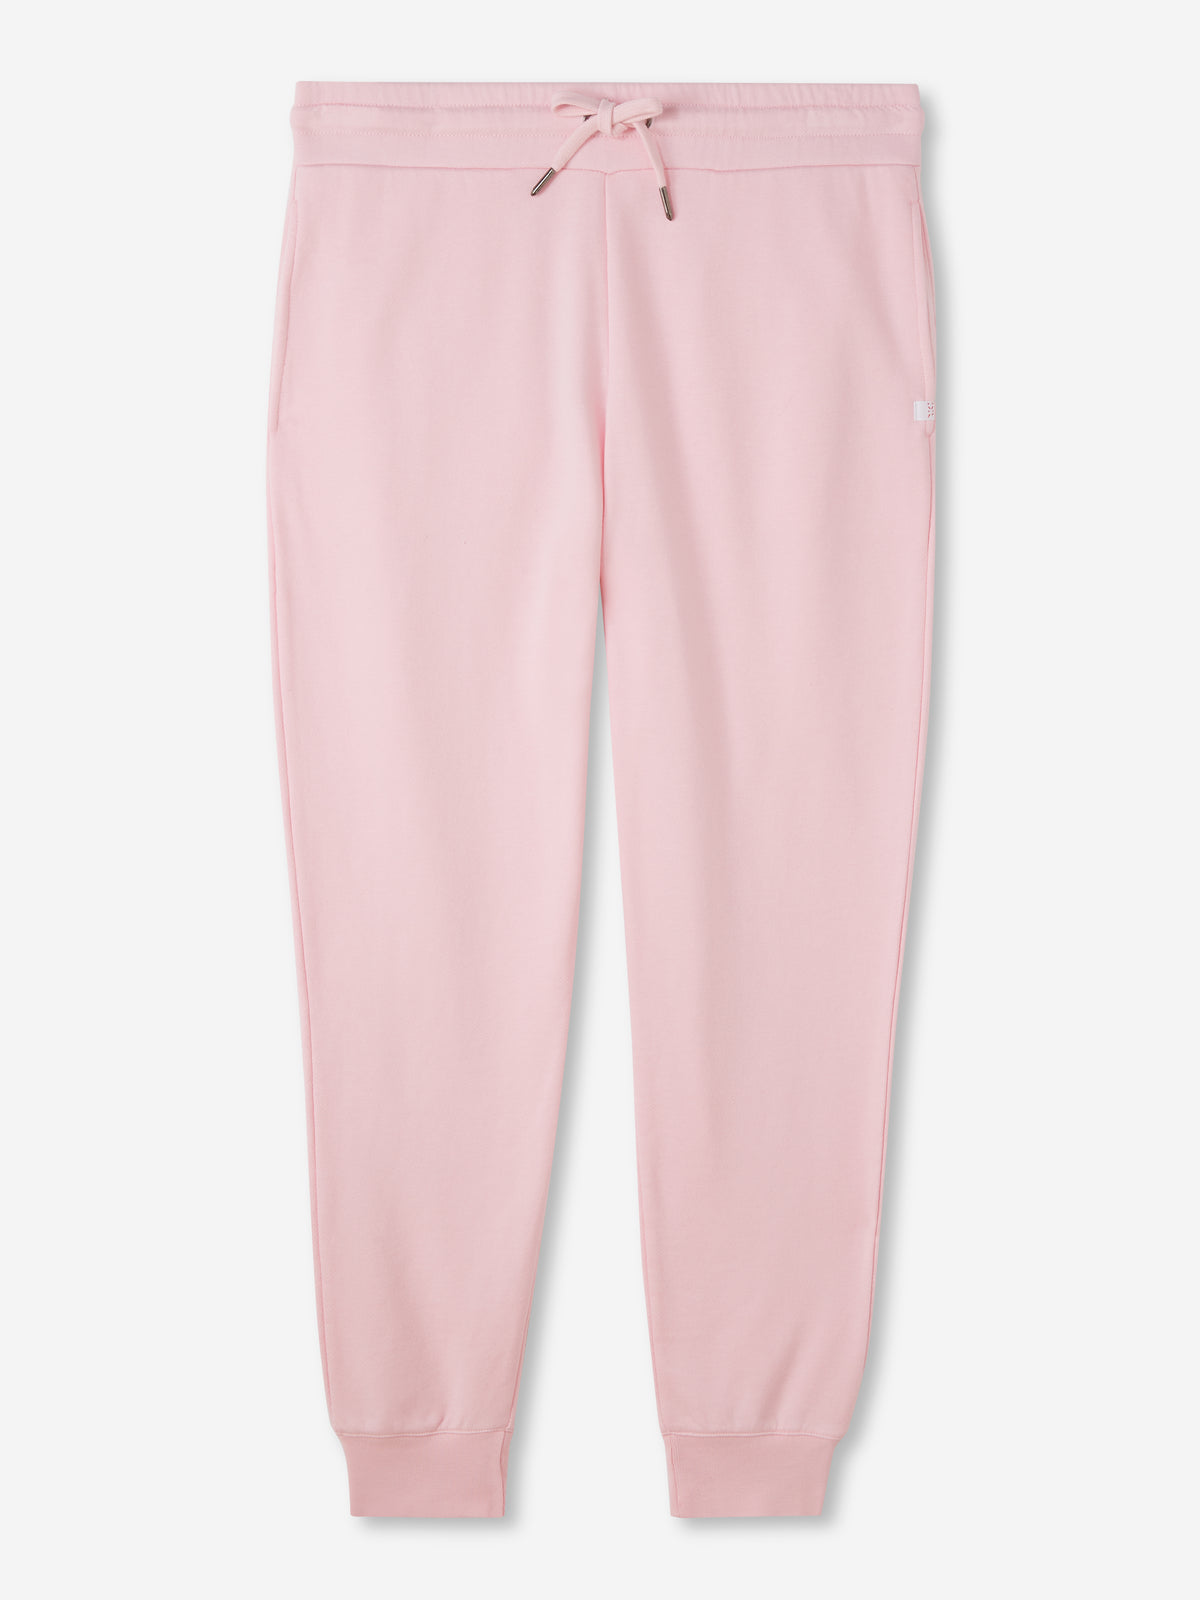 Women's Sweatpants Quinn Cotton Modal Stretch Pink